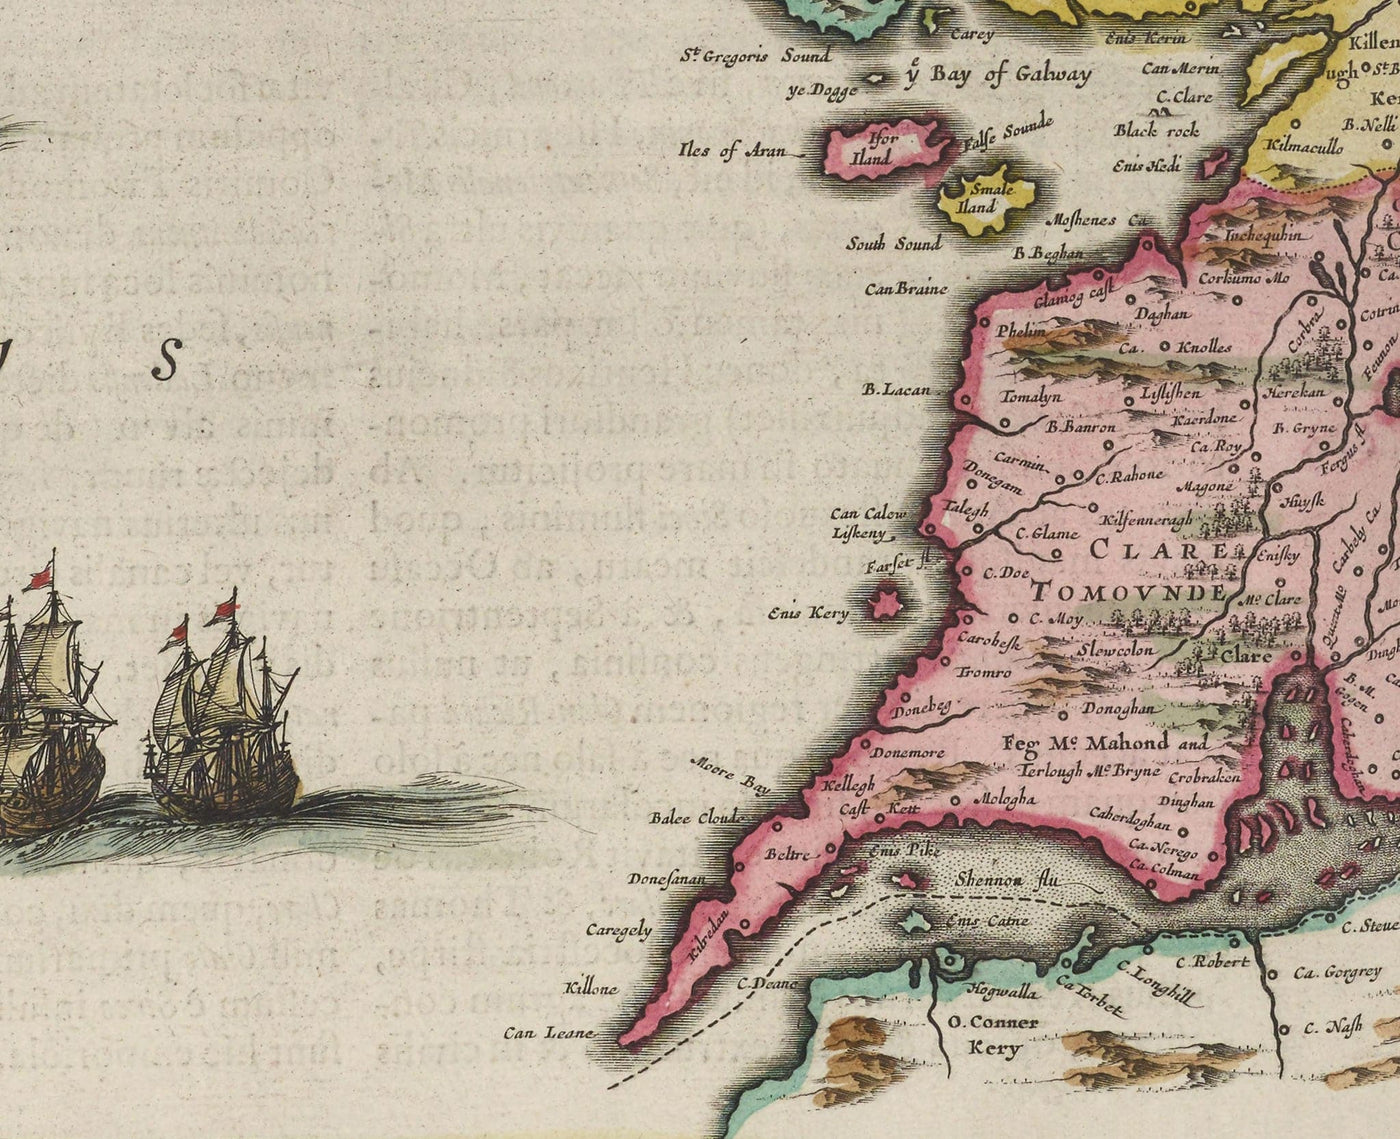 Old Map of Connacht, Ireland in 1665 by Joan Blaeu - Connaught, Galway, Sligo, Mayo, Leitrim, Clare, West Eire